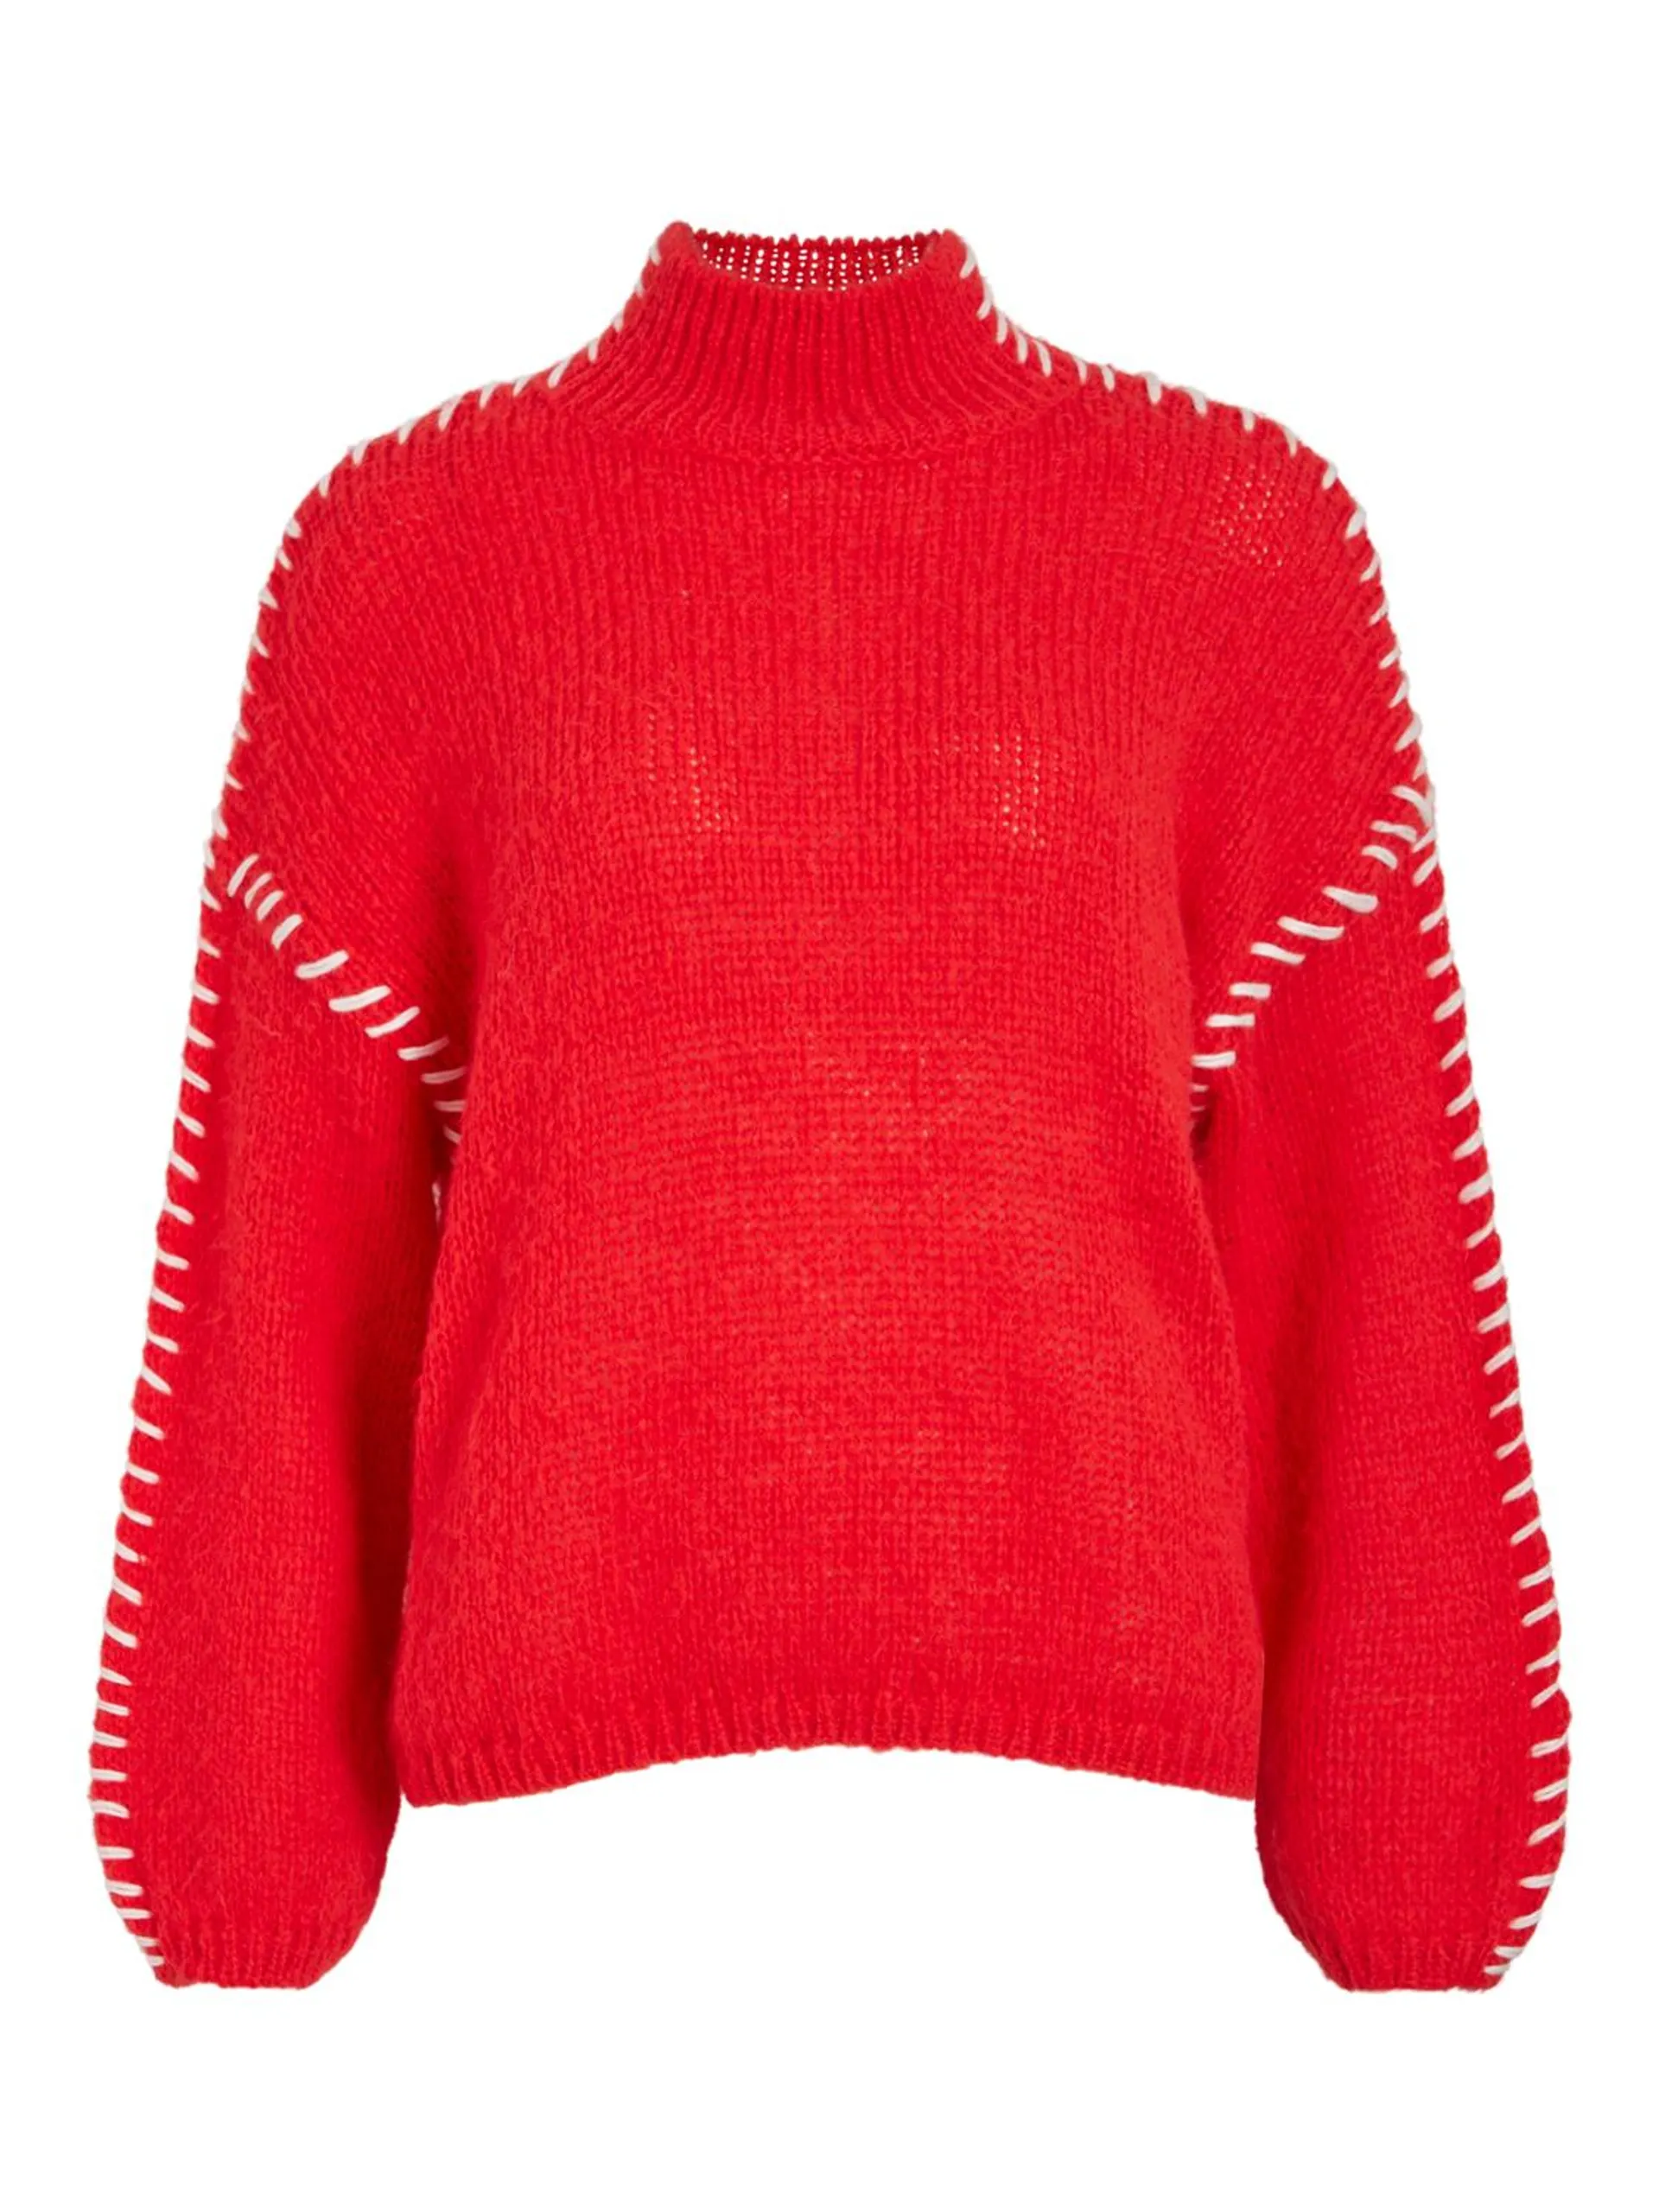 VICHOCA Pullover - Poppy Red